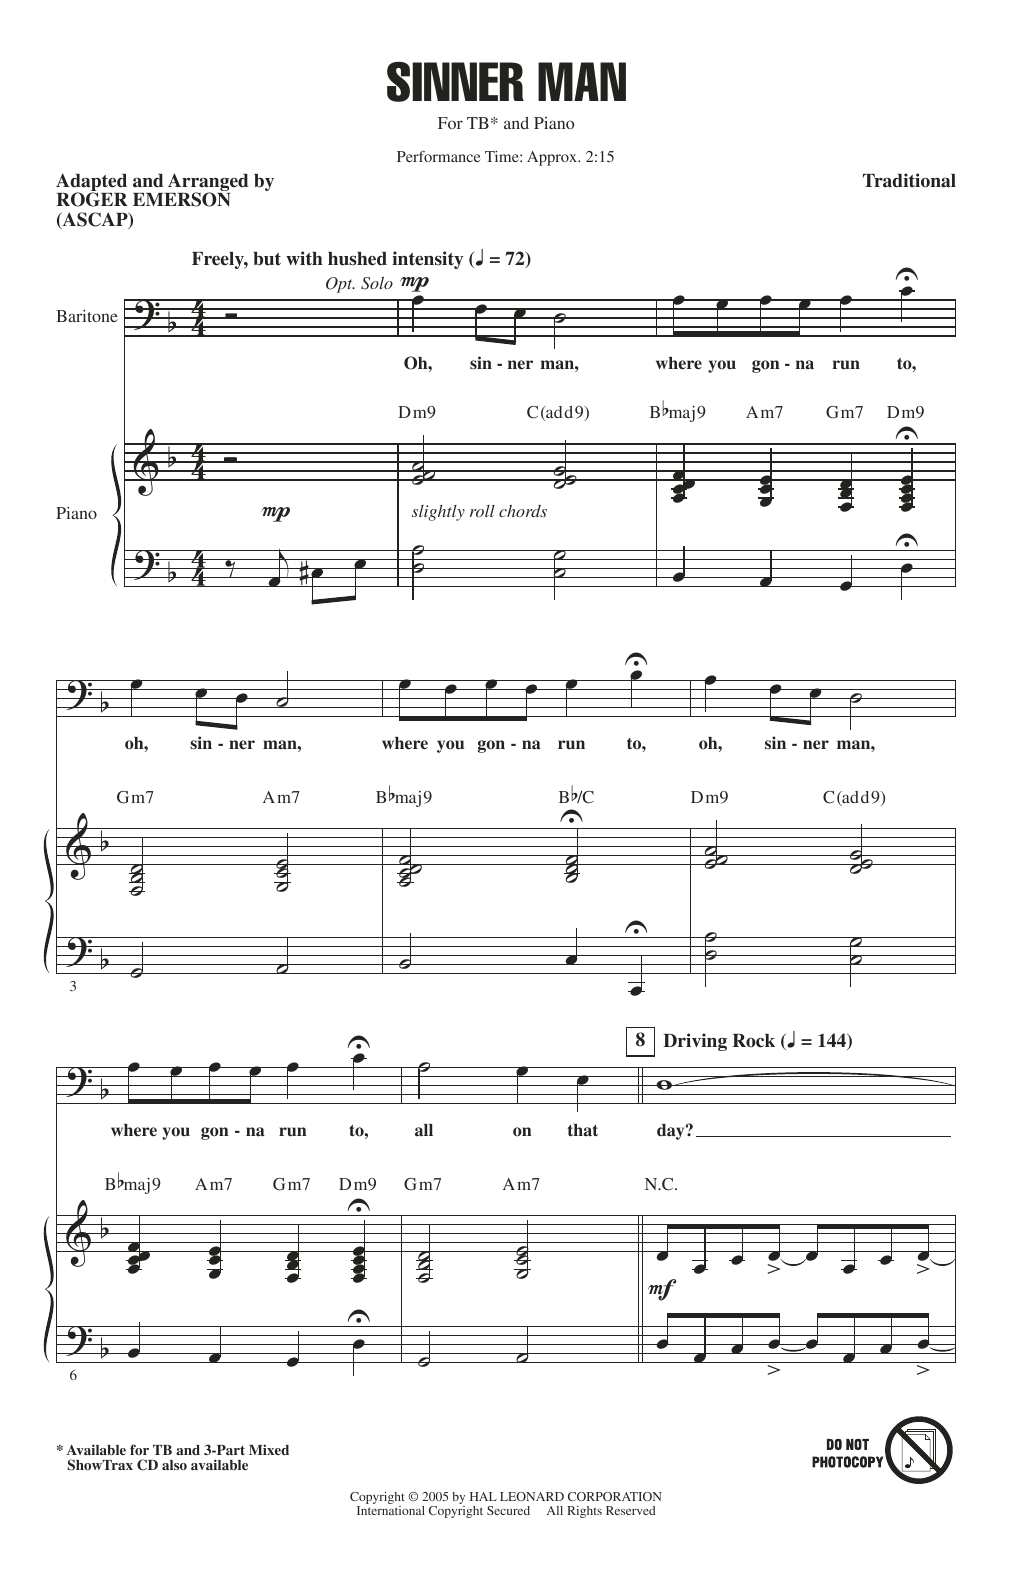 Traditional Spiritual Sinner Man (arr. Roger Emerson) Sheet Music Notes & Chords for TB Choir - Download or Print PDF